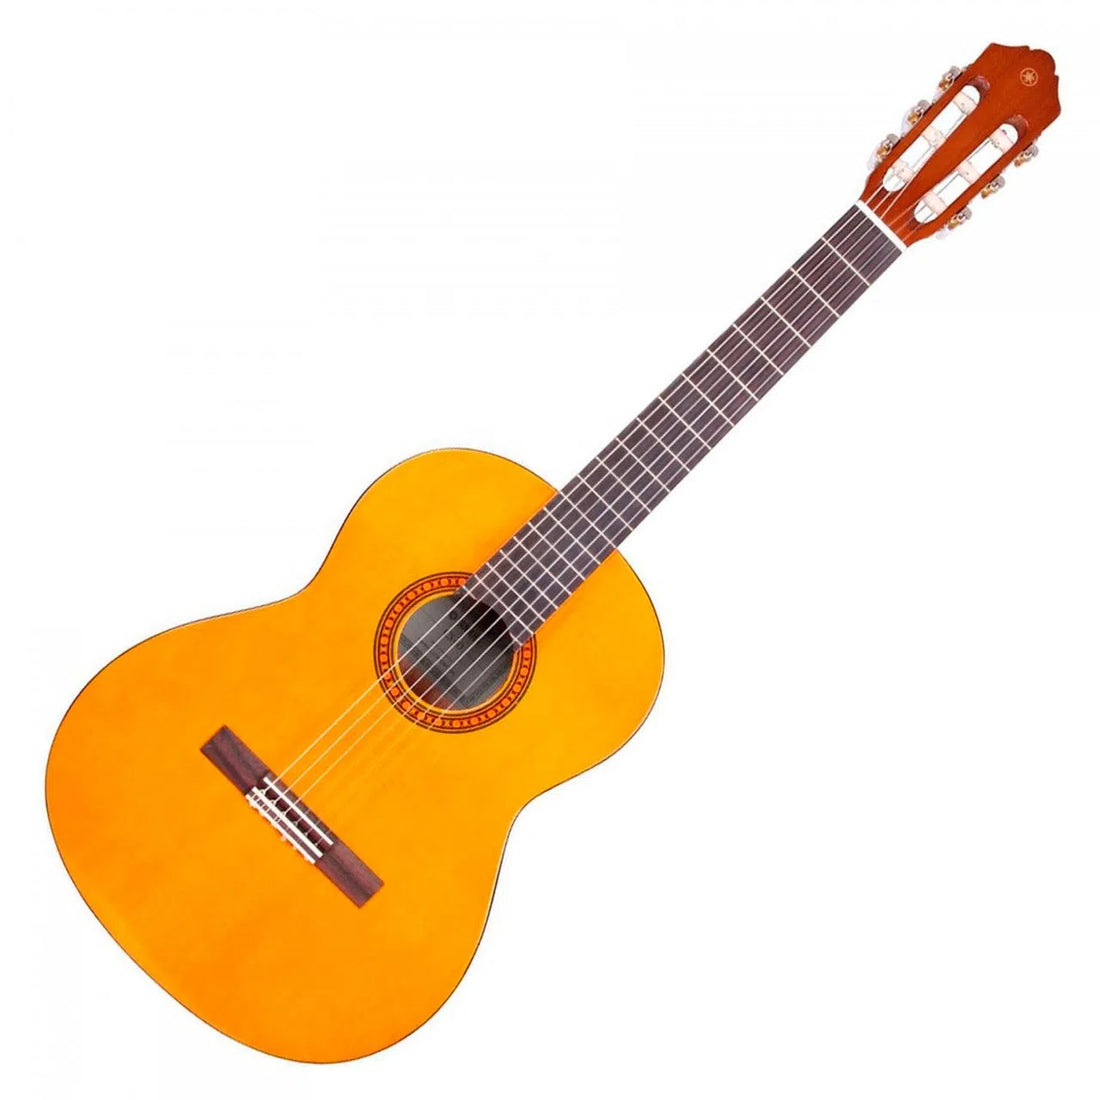 Yamaha CS40 Guitarra Acústica, color Natural de 6 cuerdas